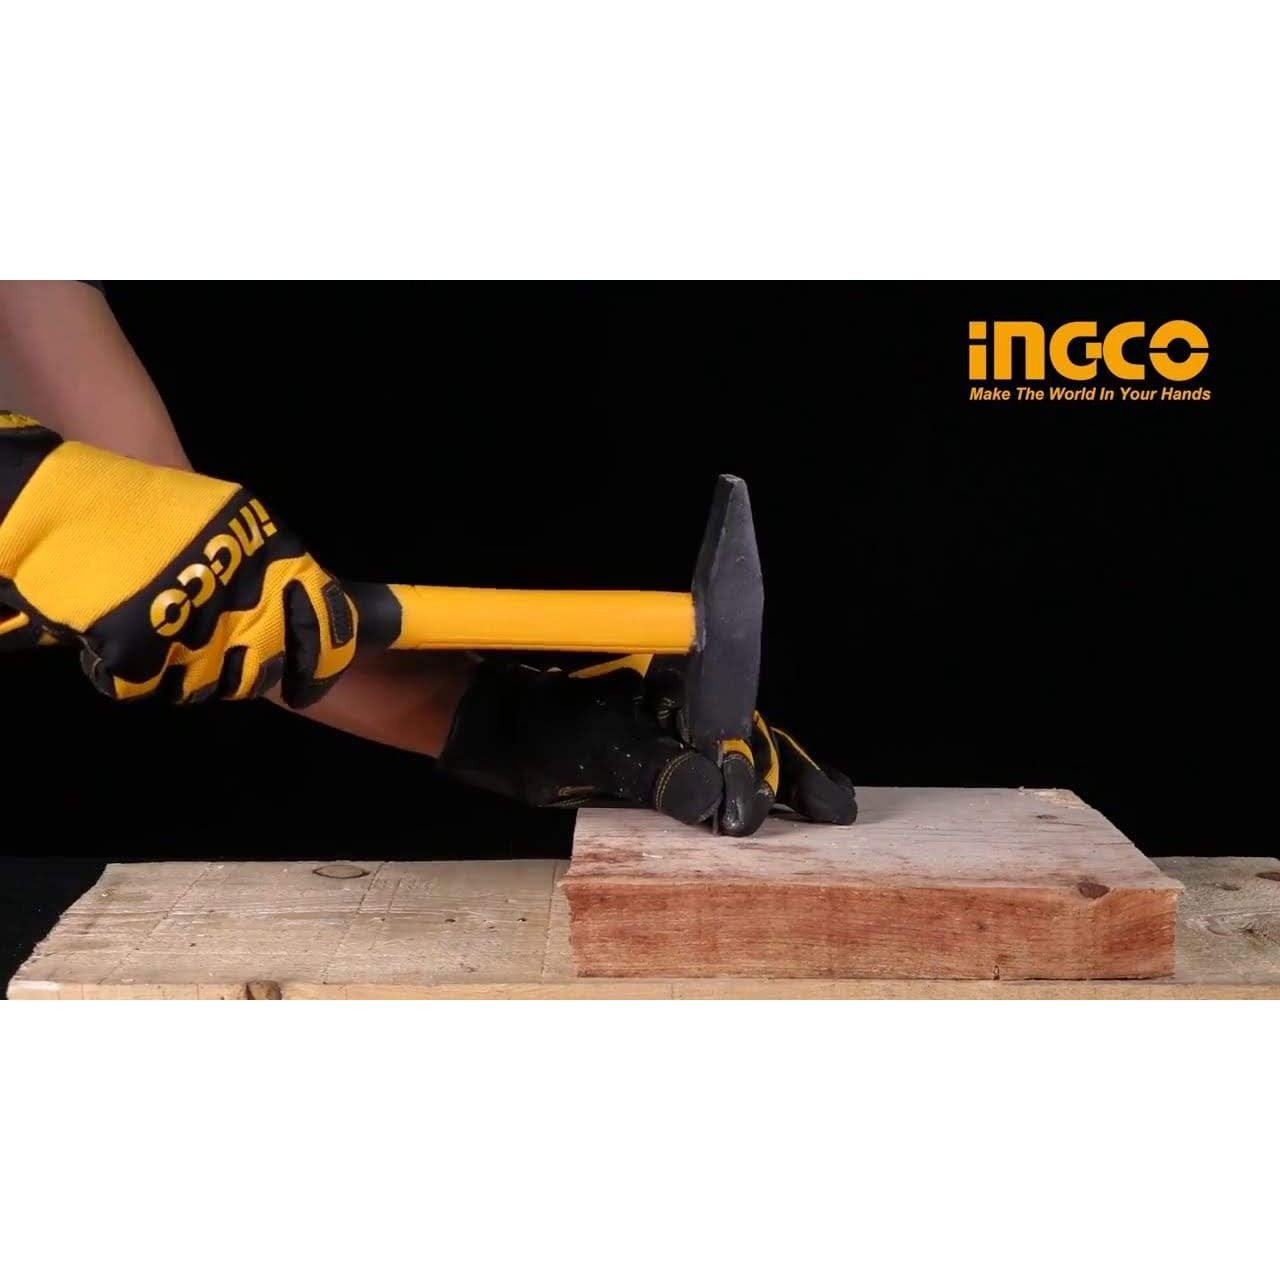 Ingco Machinist Hammer - 300g, 500g & 1500g | Supply Master | Accra, Ghana Tools Building Steel Engineering Hardware tool